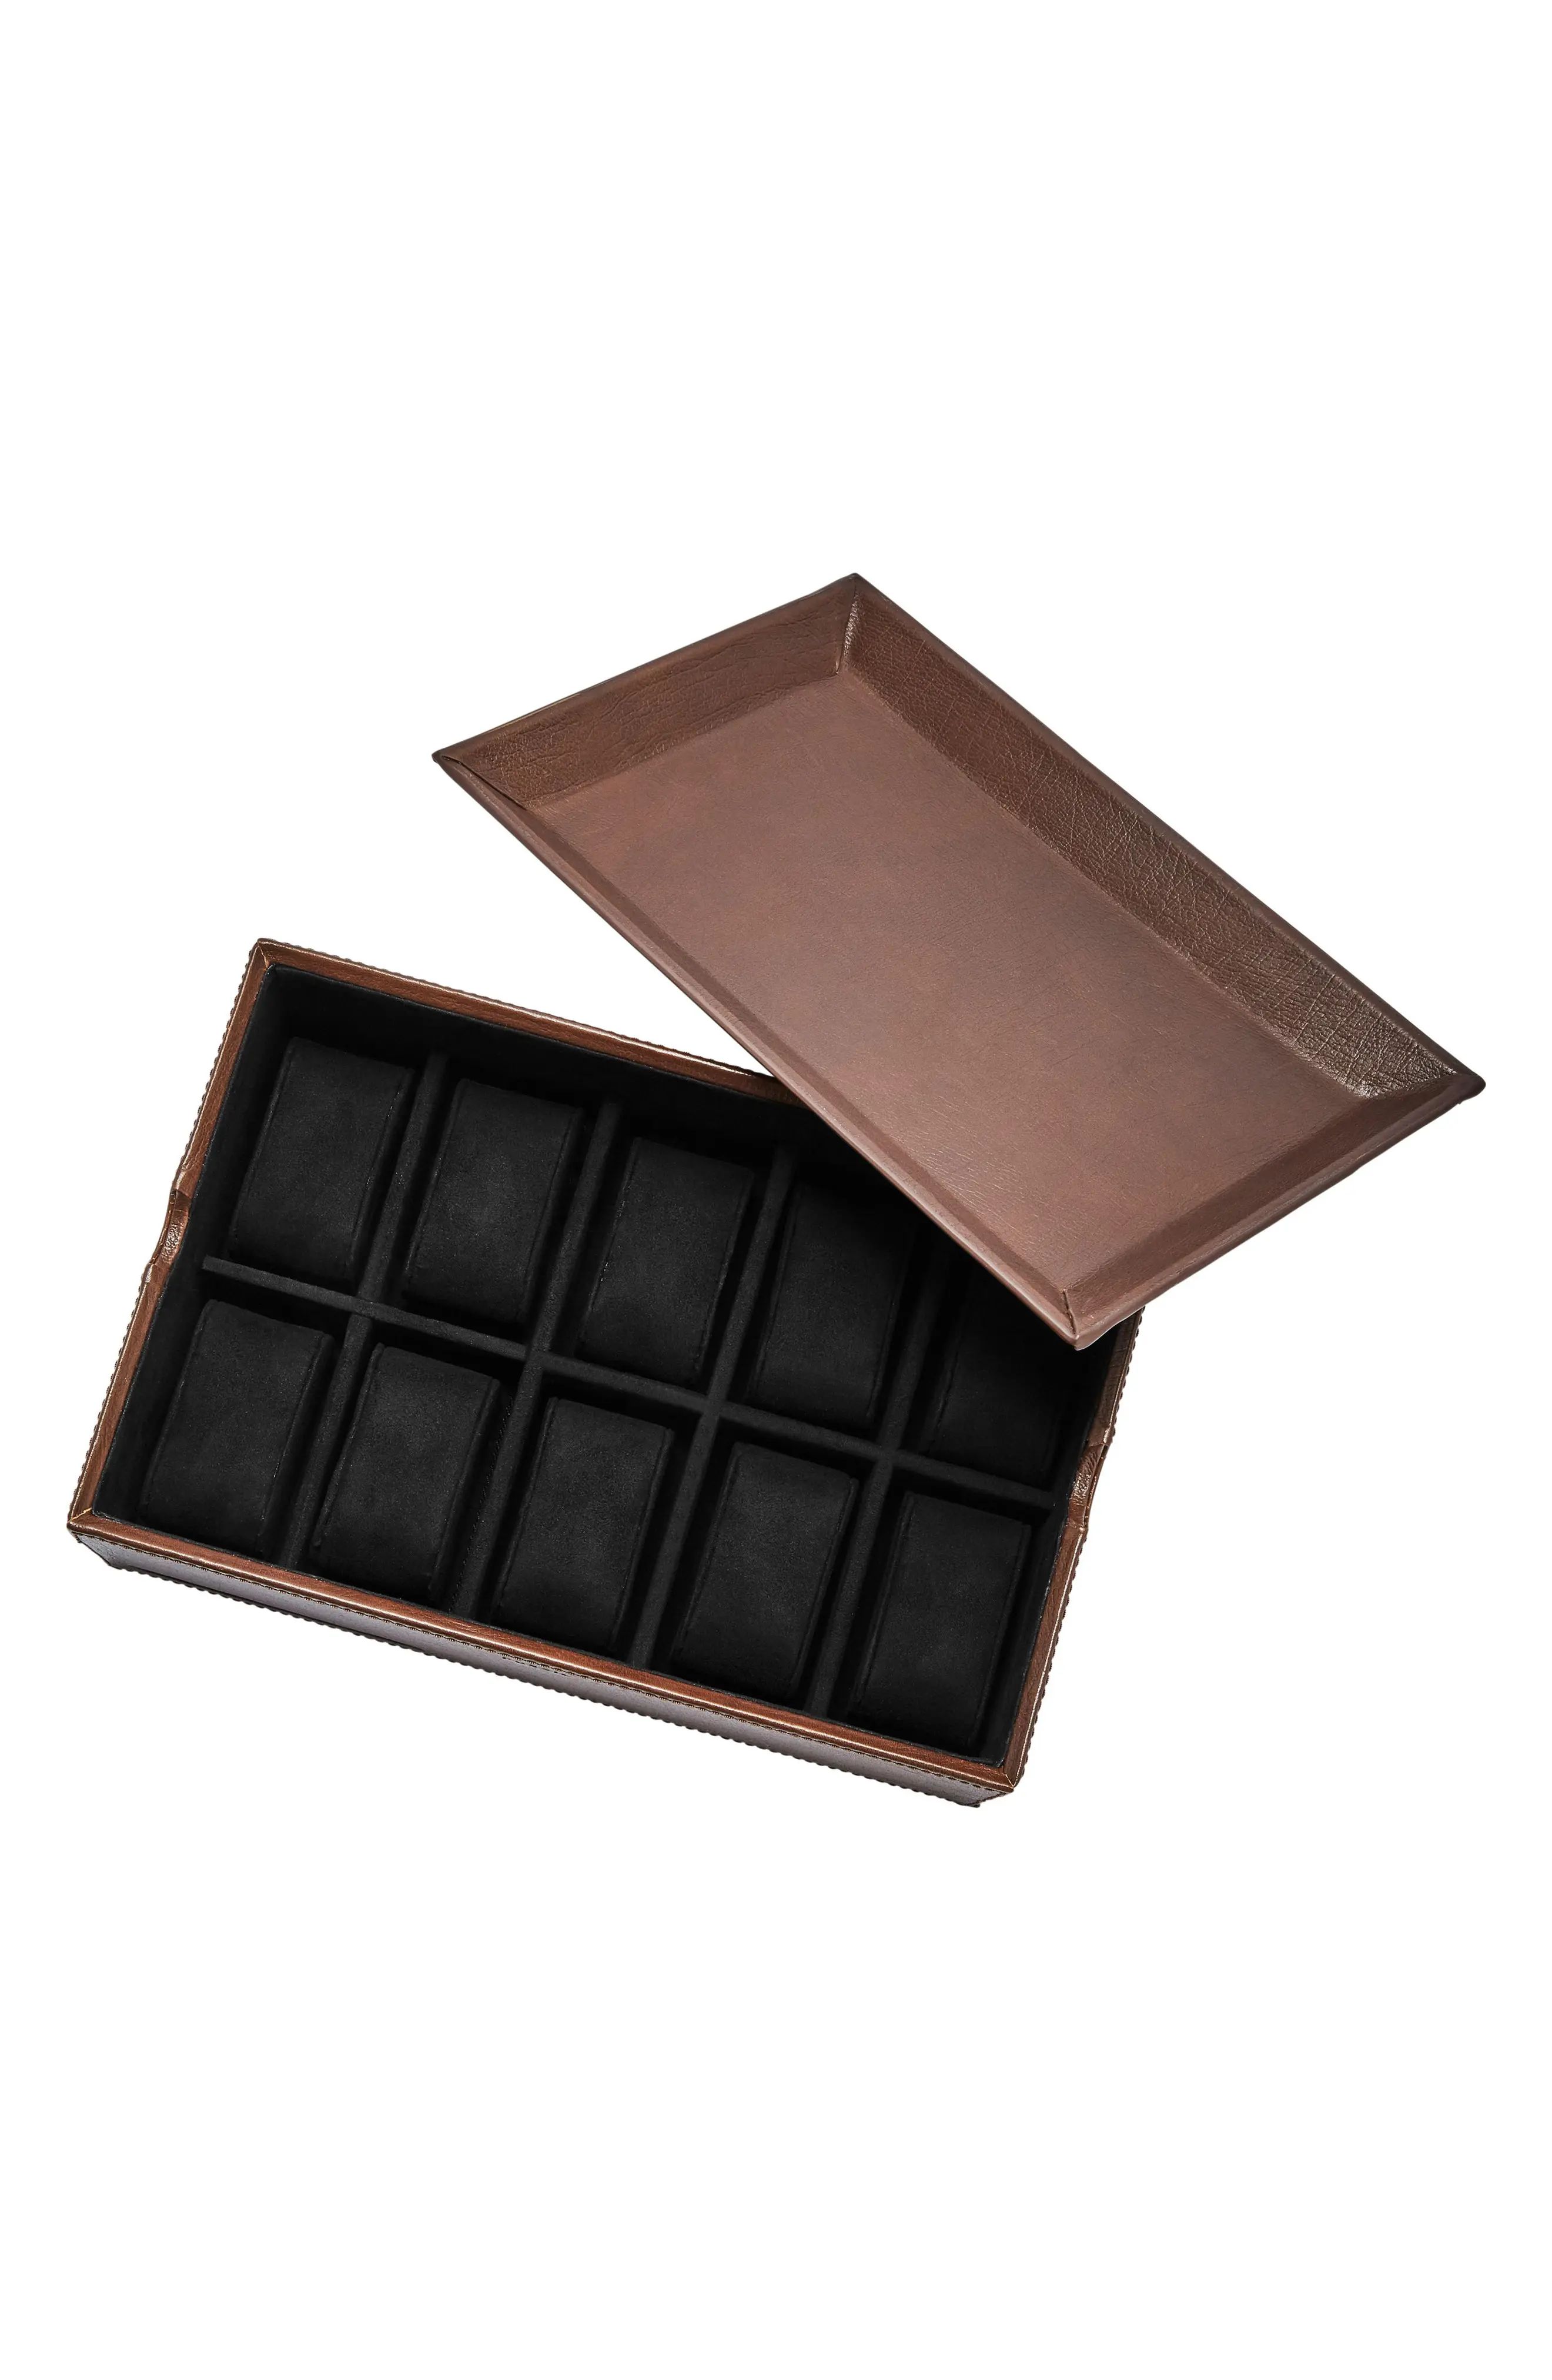 10-Piece Watch Box & Valet Tray | Nordstrom